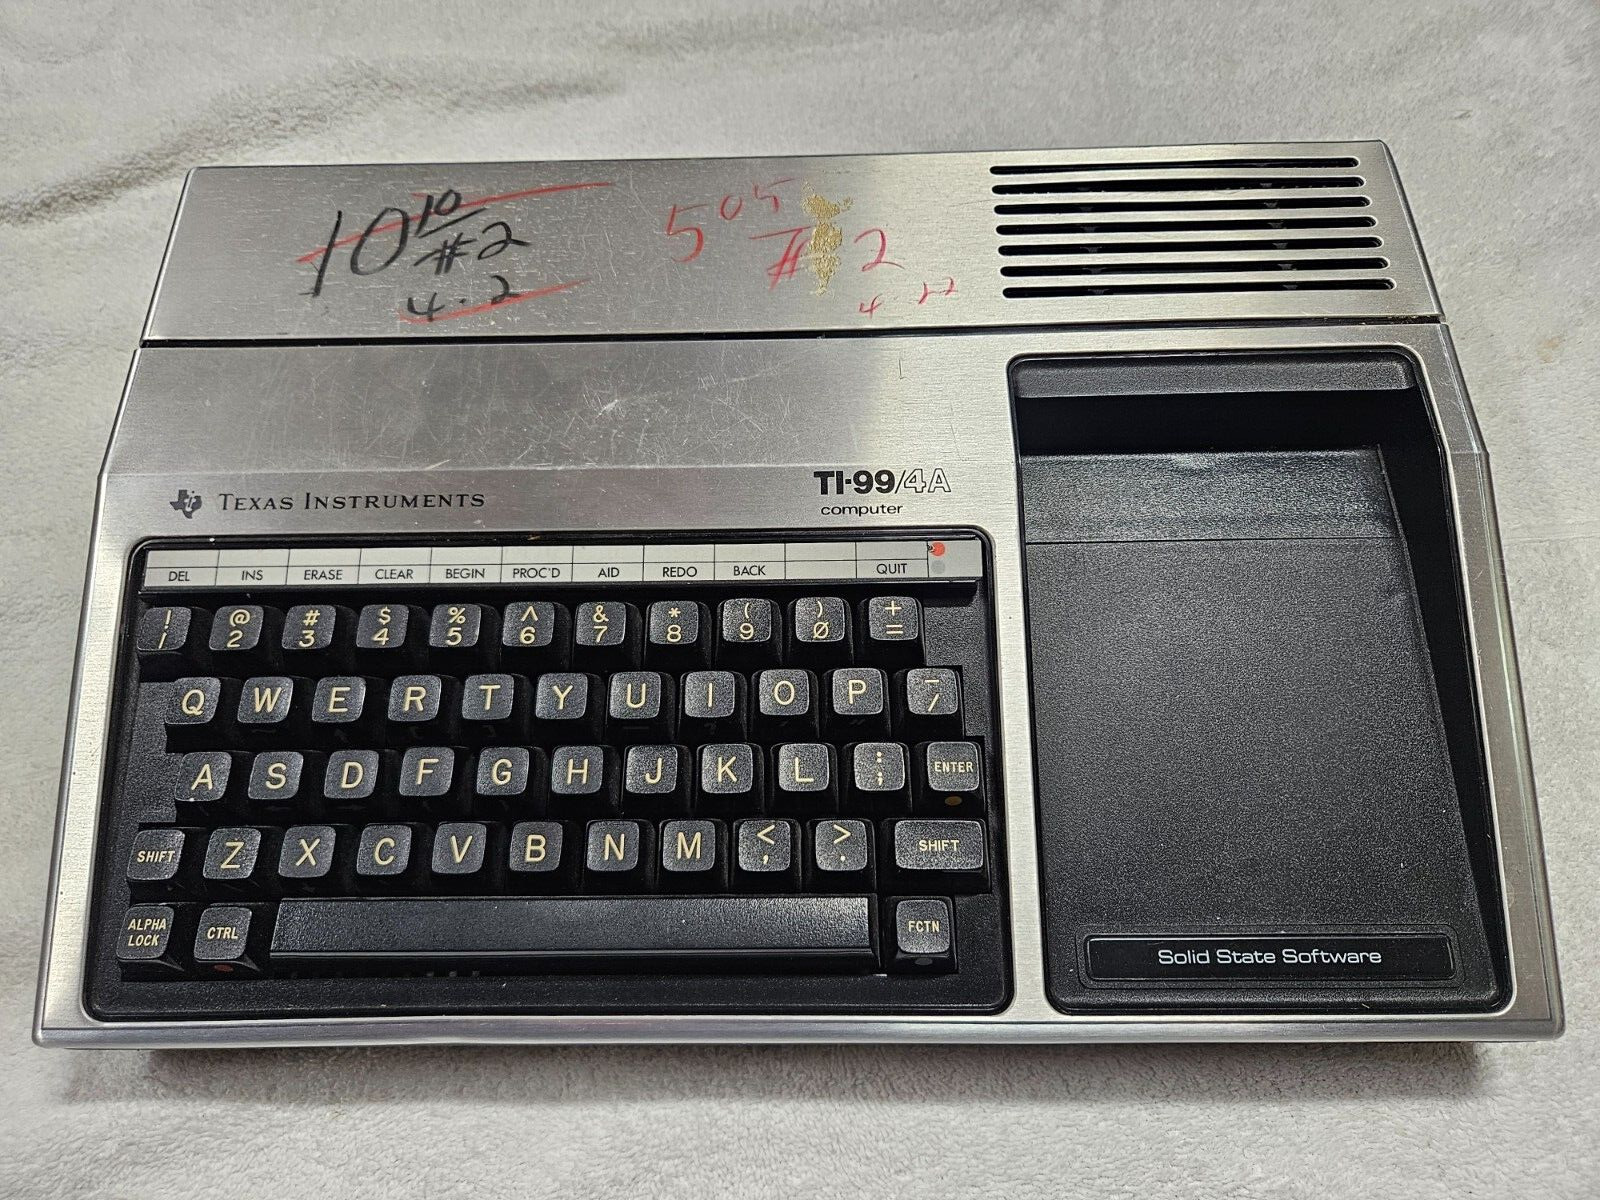 1981 Vintage Texas Instruments Ti-99/4A (PHC004A) Home Computer - Good Condition